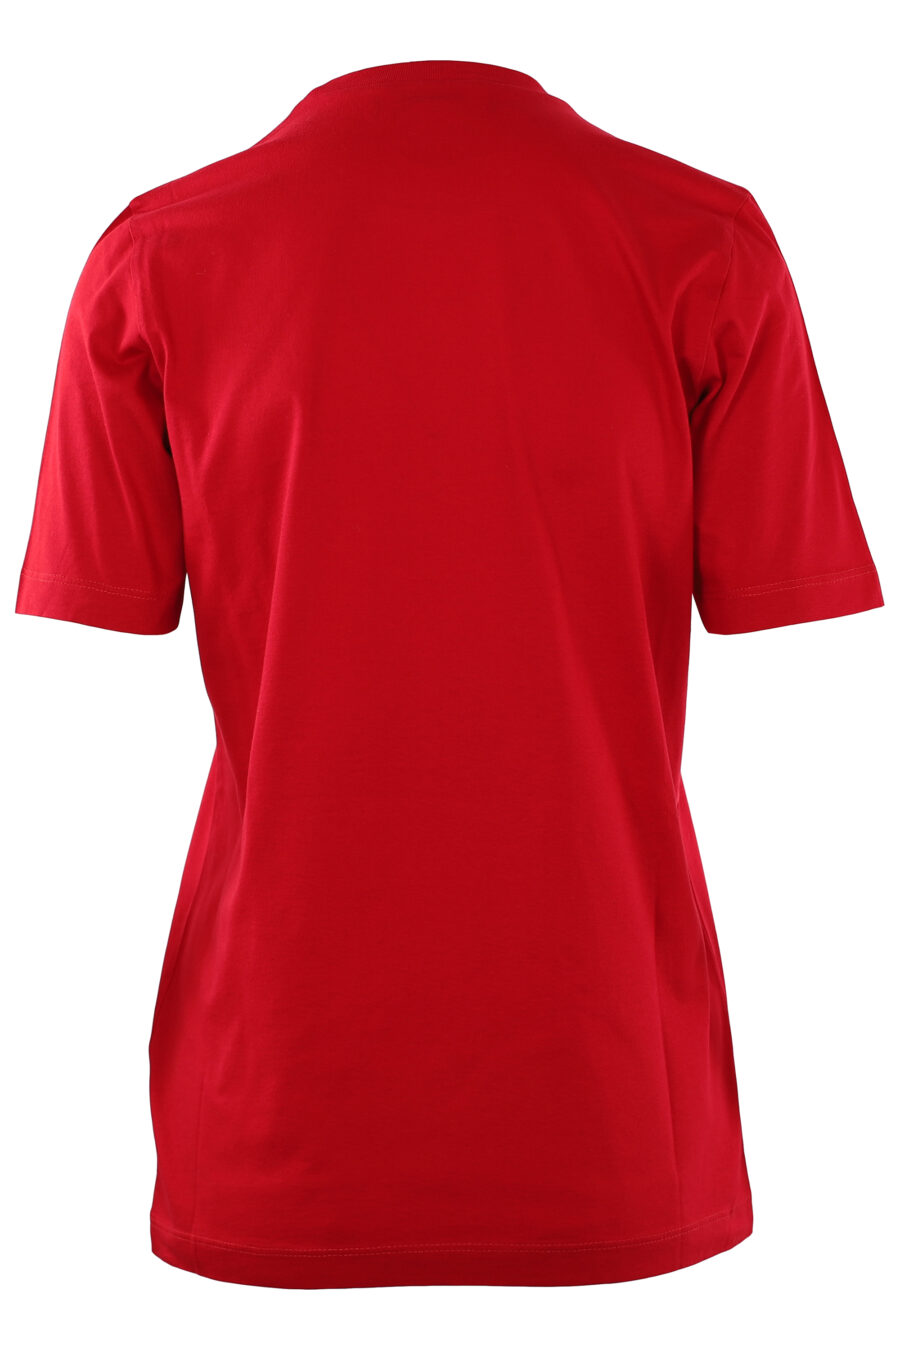 T-shirt rouge foncé avec logo "icon" blanc - IMG 0251